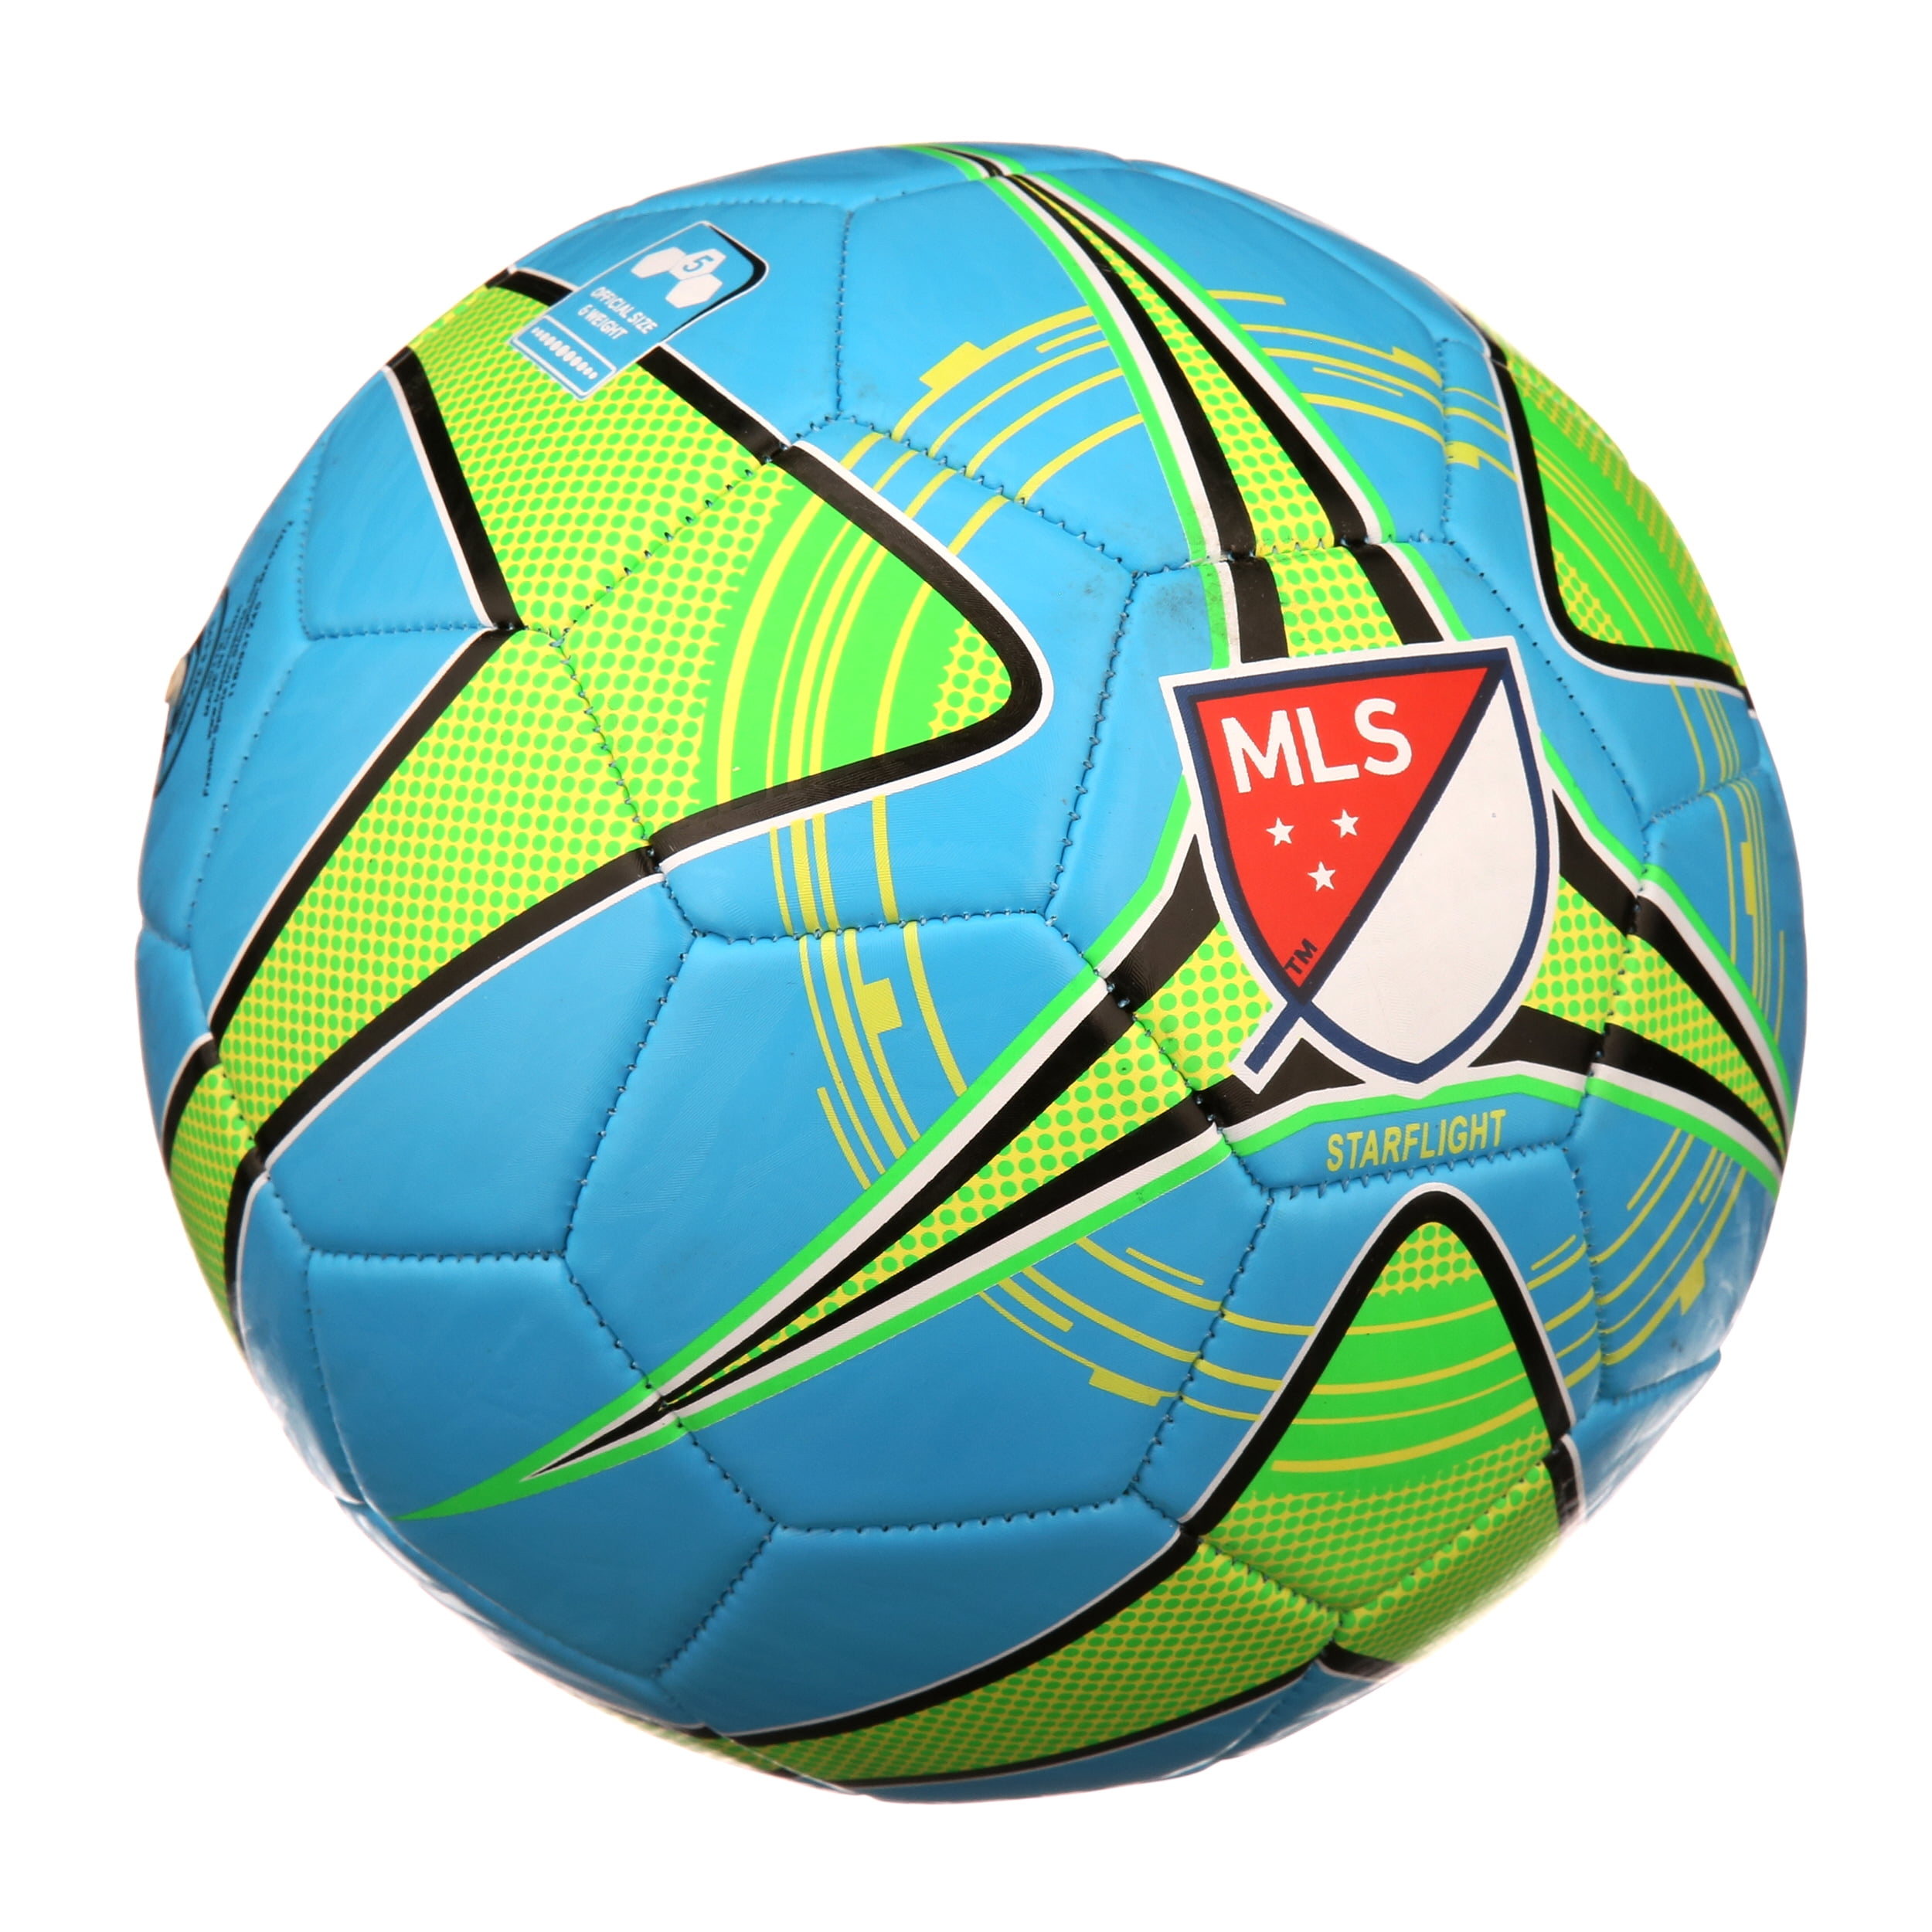 mls soccer ball size 4